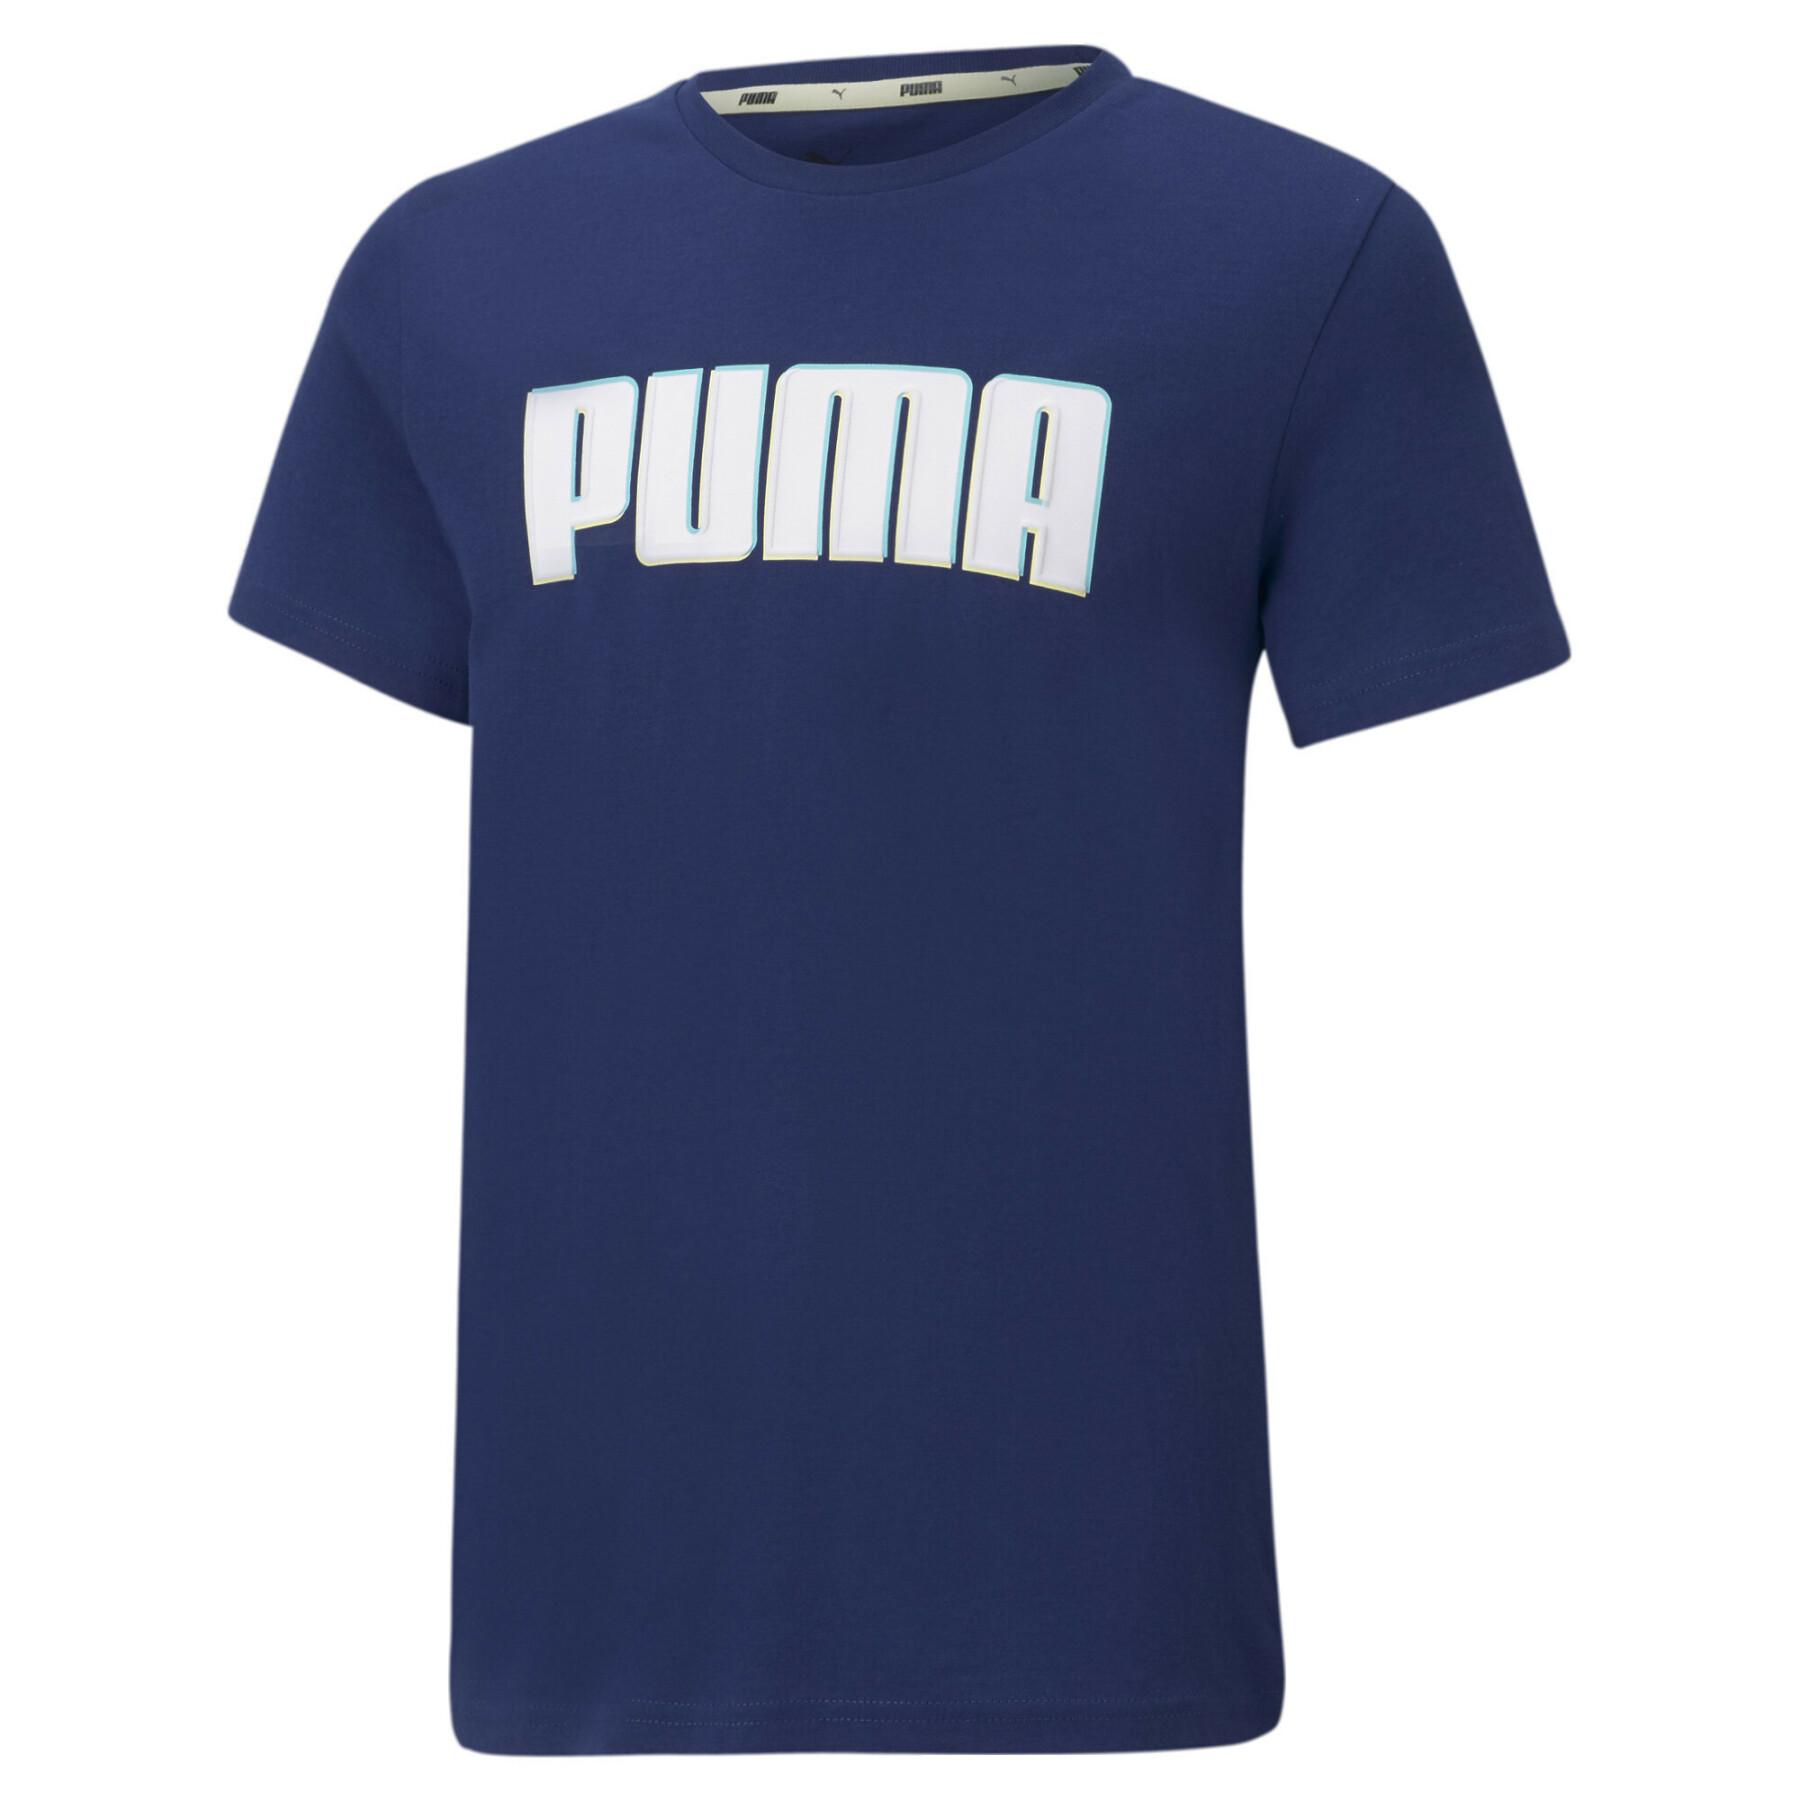 T-shirt enfant Puma Alpha Graphic